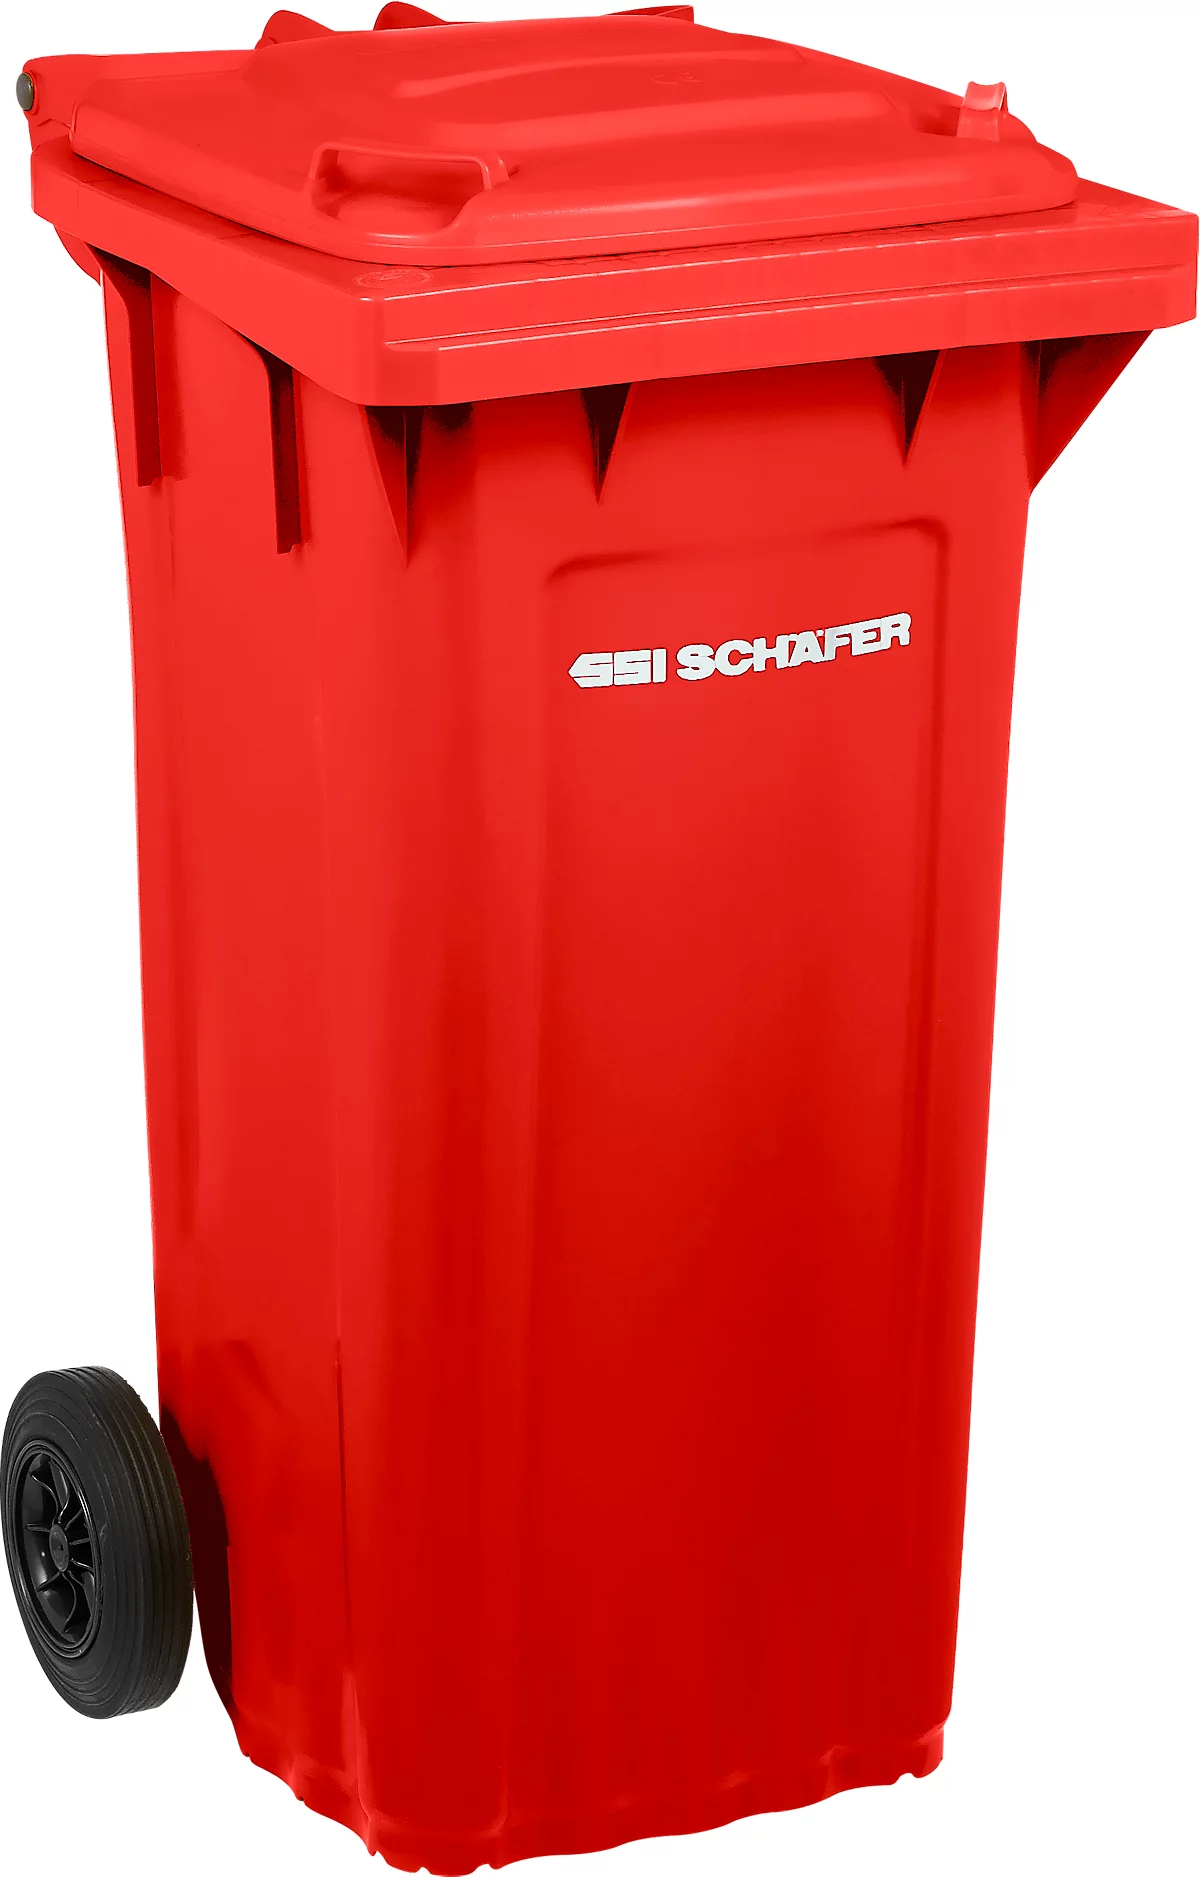 SSI Schäfer Mülltonne PRO 120 WAVE, 120 l, fahrbar, rot